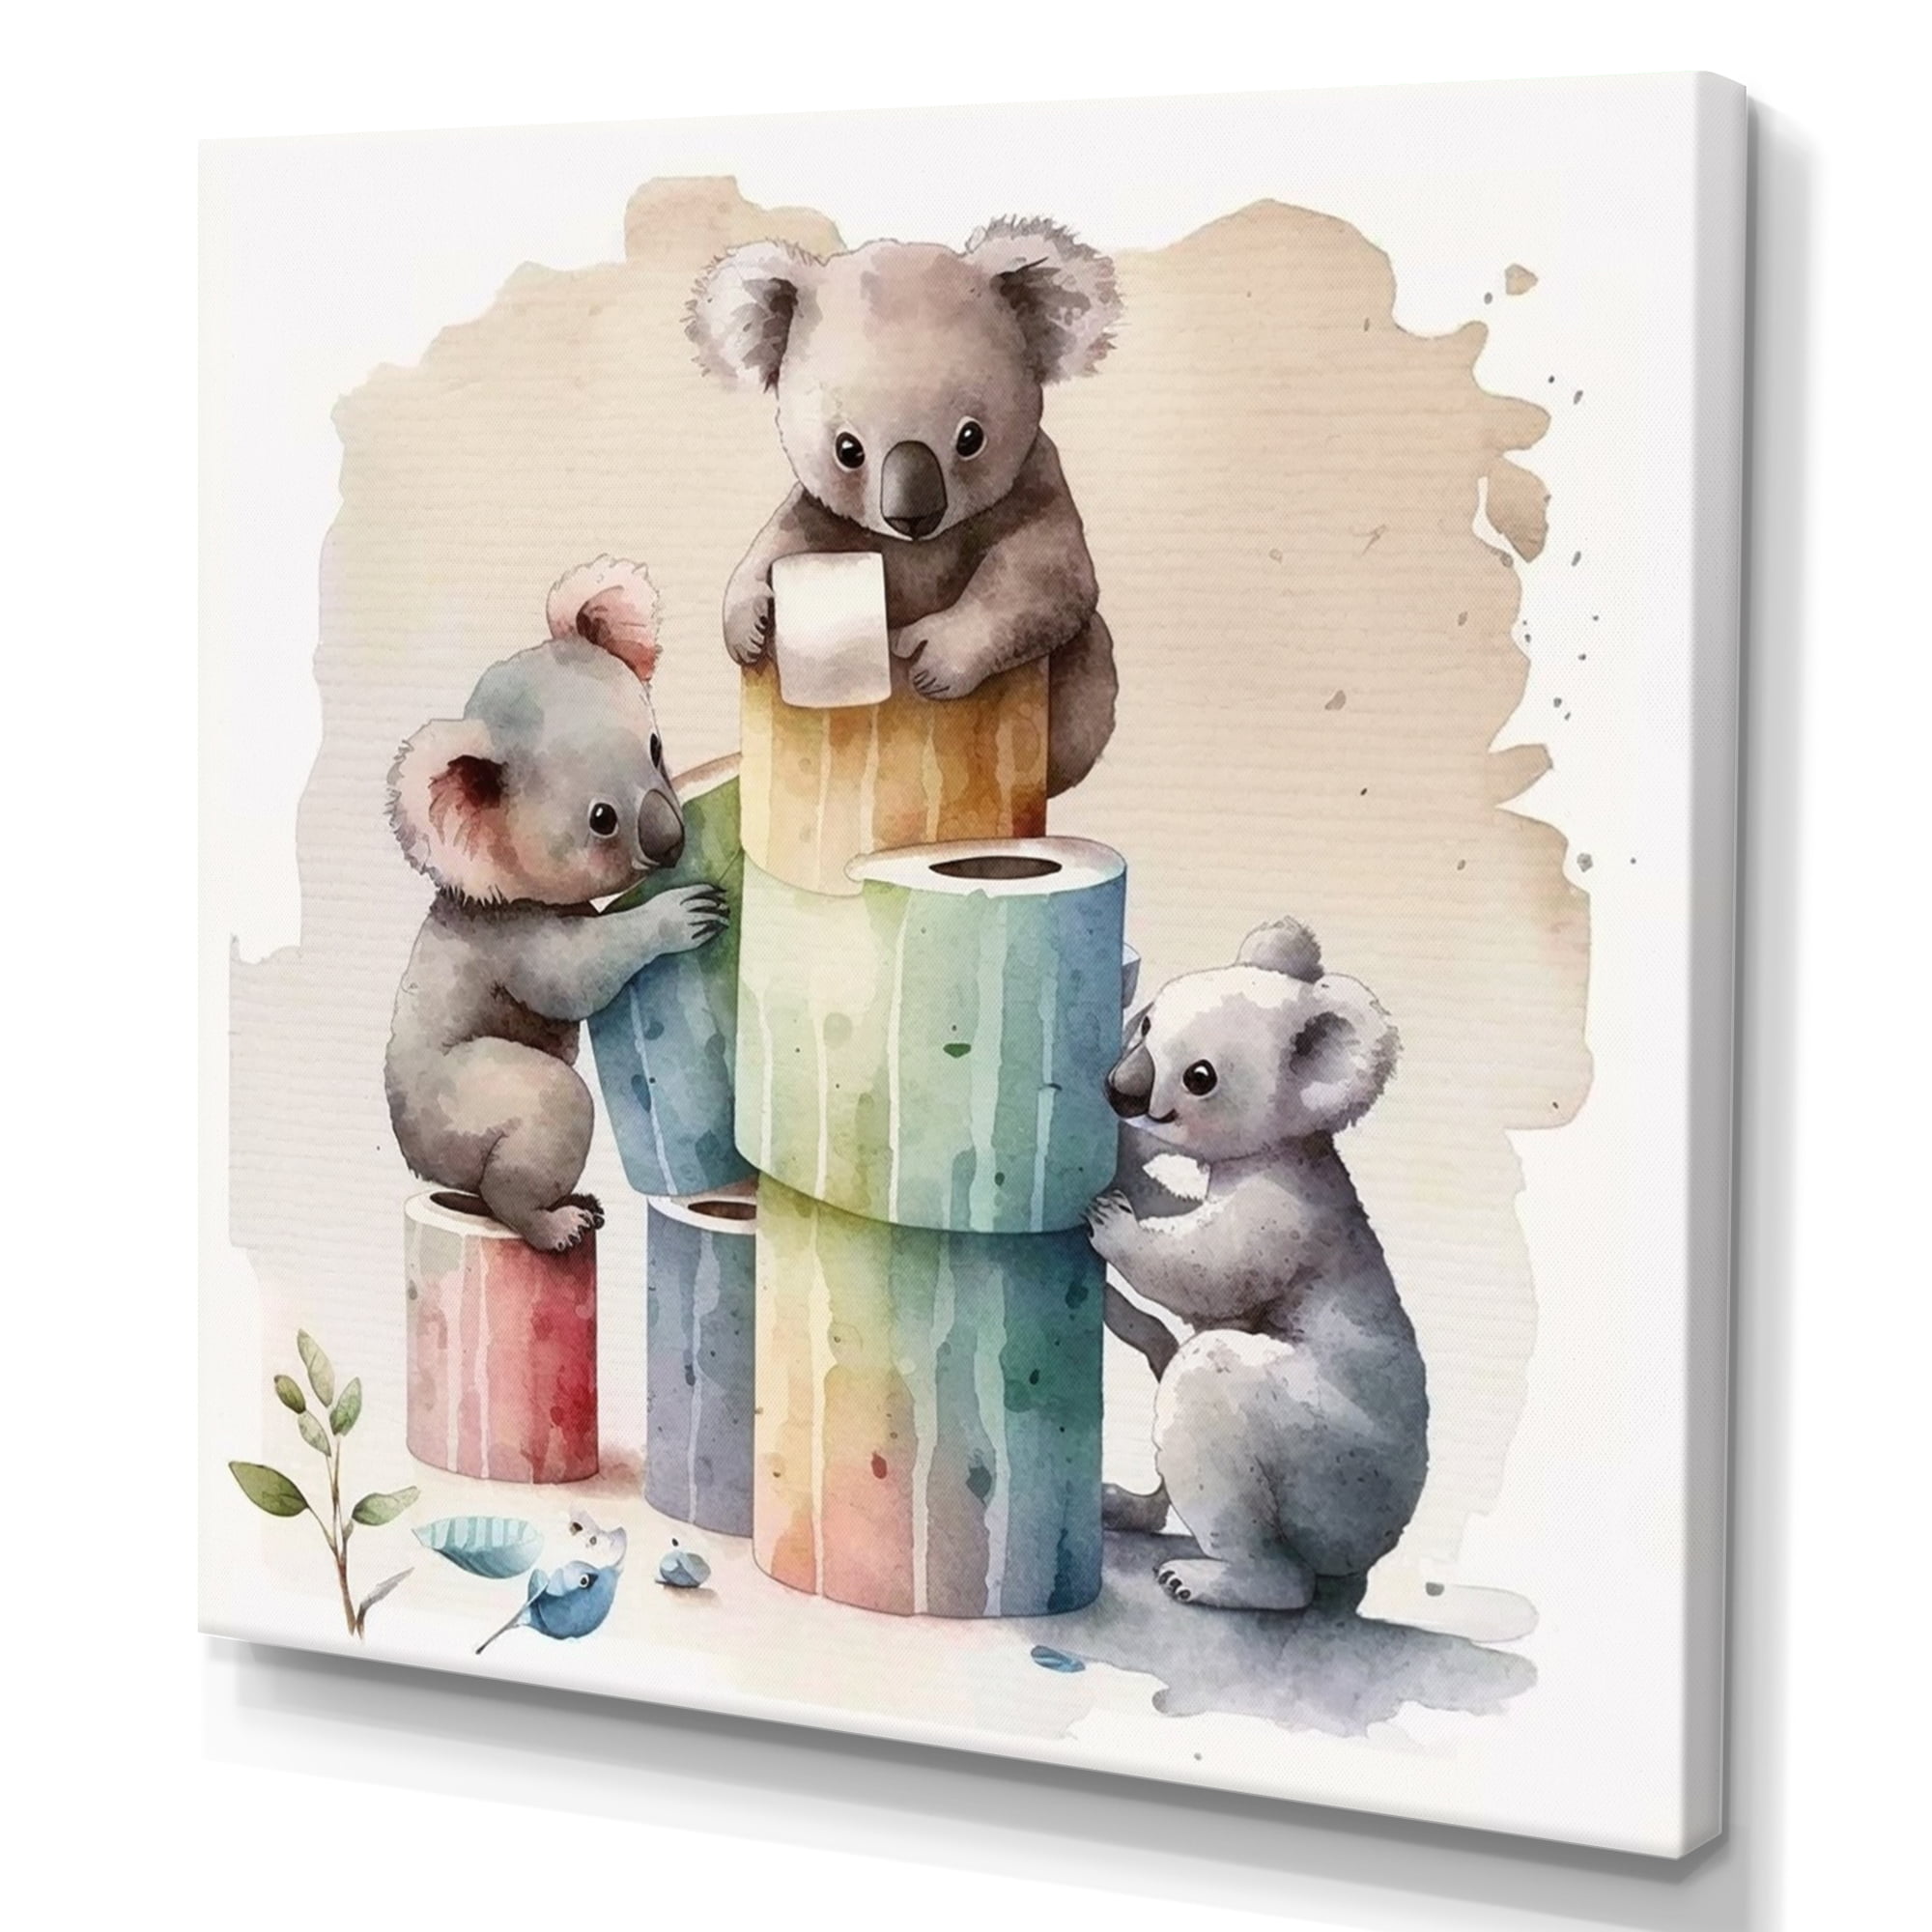 Designart Koala Bears Building A Tower of Toilet Paper Canvas Wall Art, Size: 16 x 16